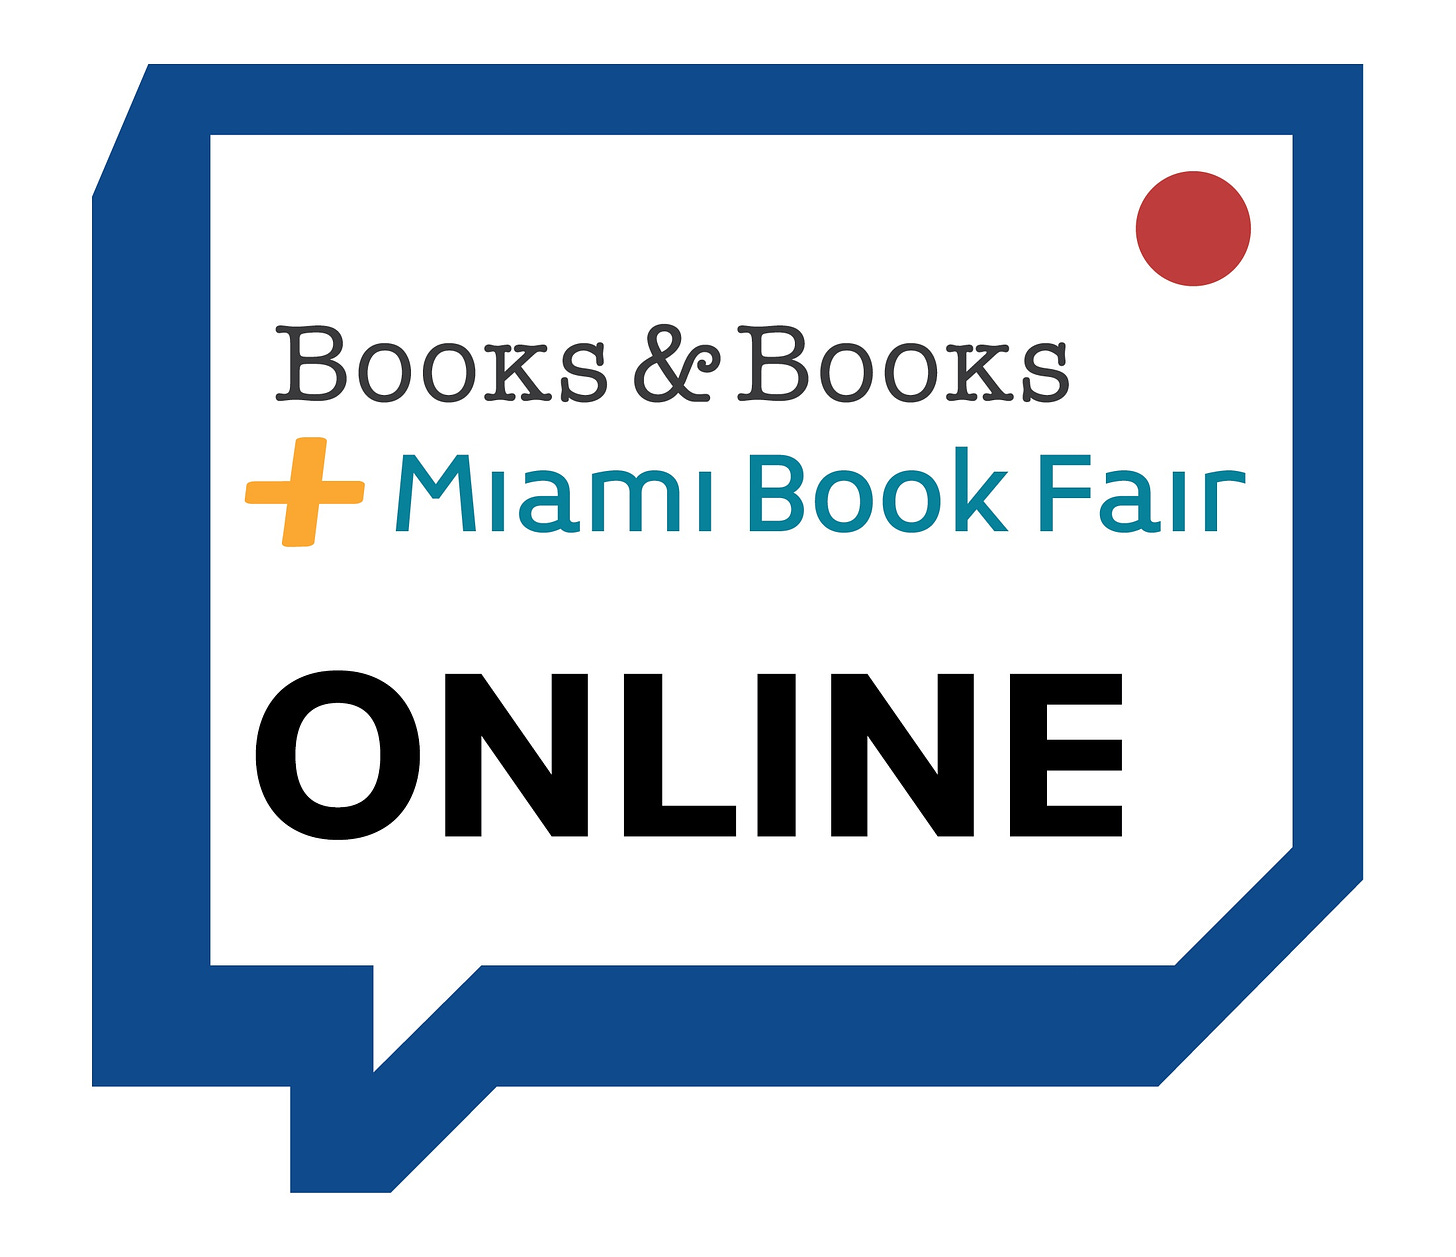 This logo says "Books & Books and Miami Book Fair Online"